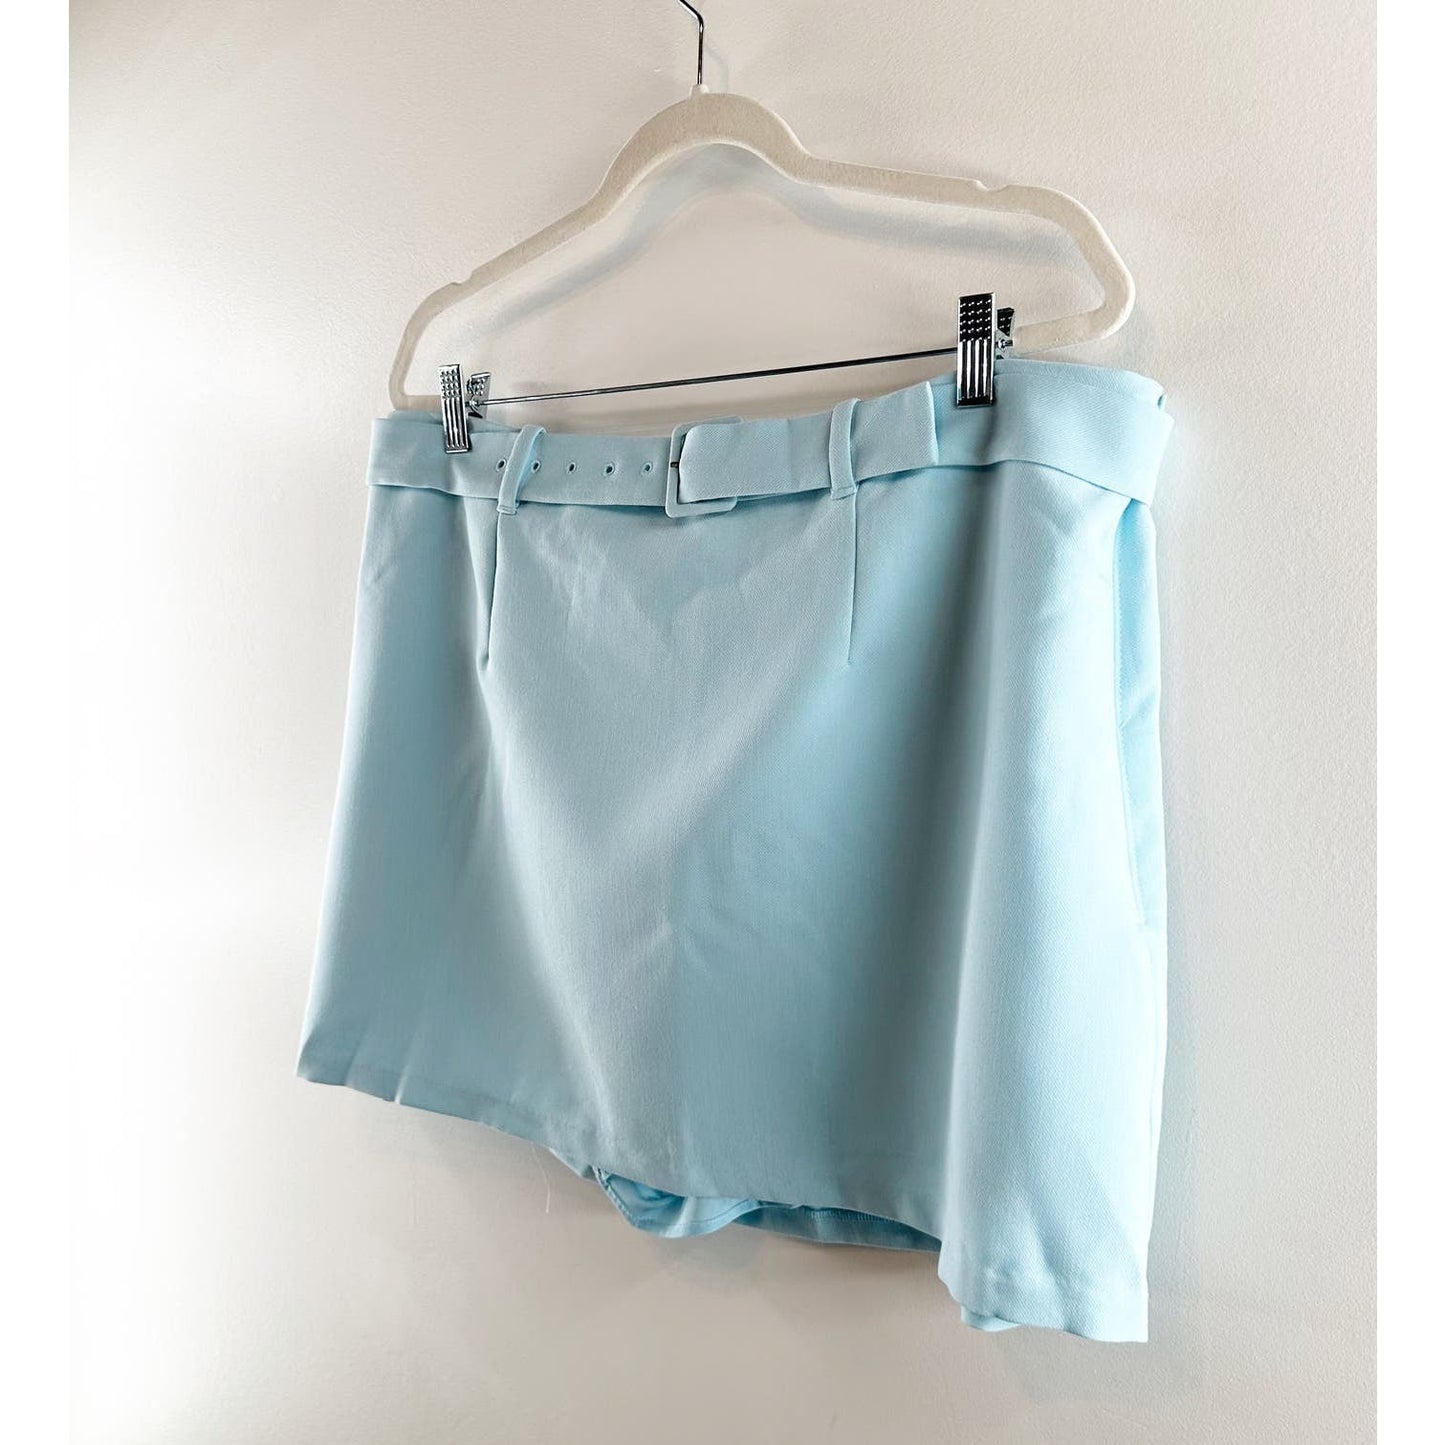 Abercrombie & Fitch Belted Menswear Mini Skort Skirt Baby Blue Pastel XL